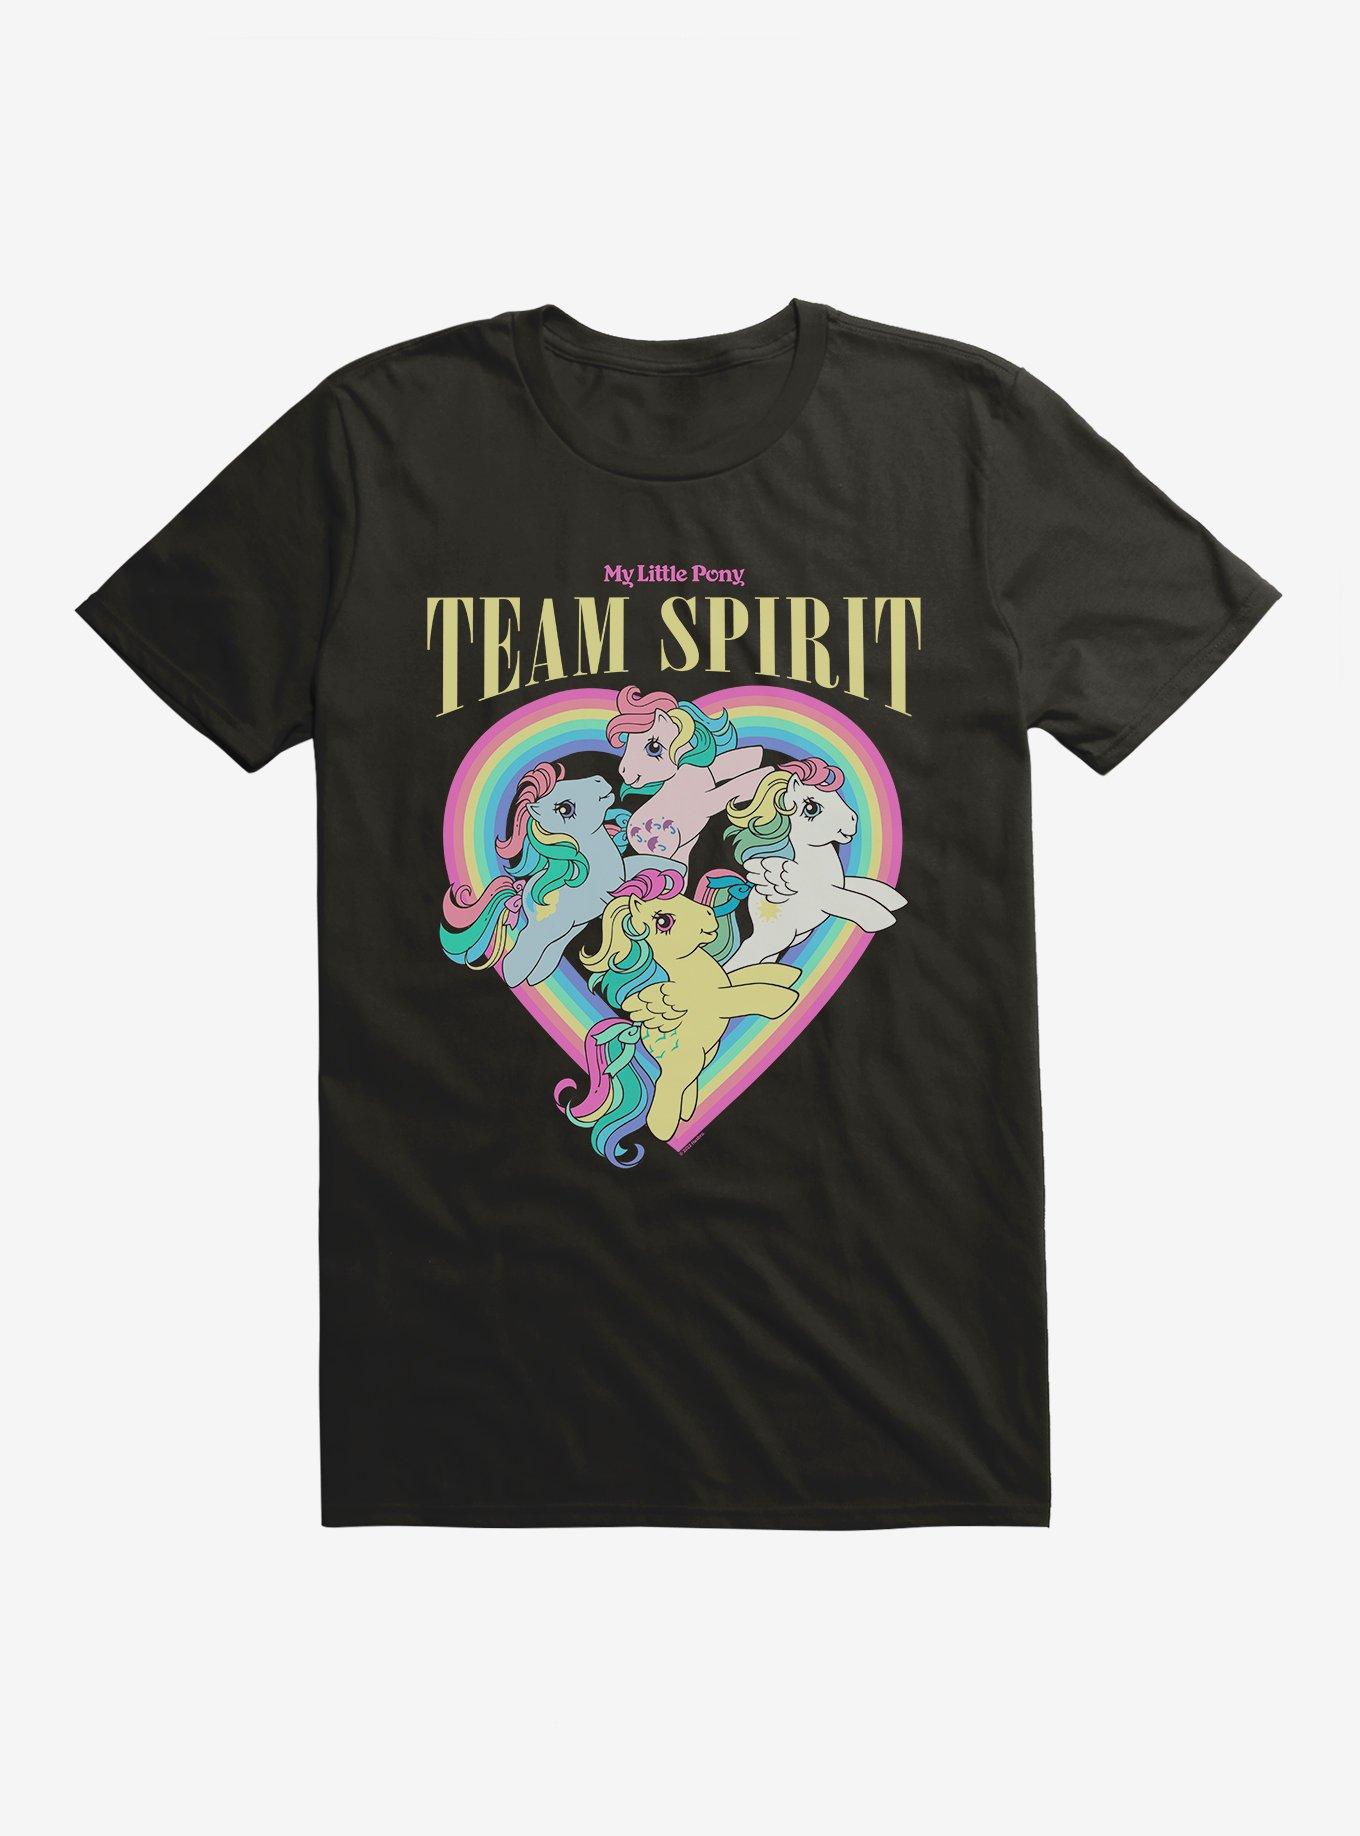 My Little Pony Team Spirit T-Shirt